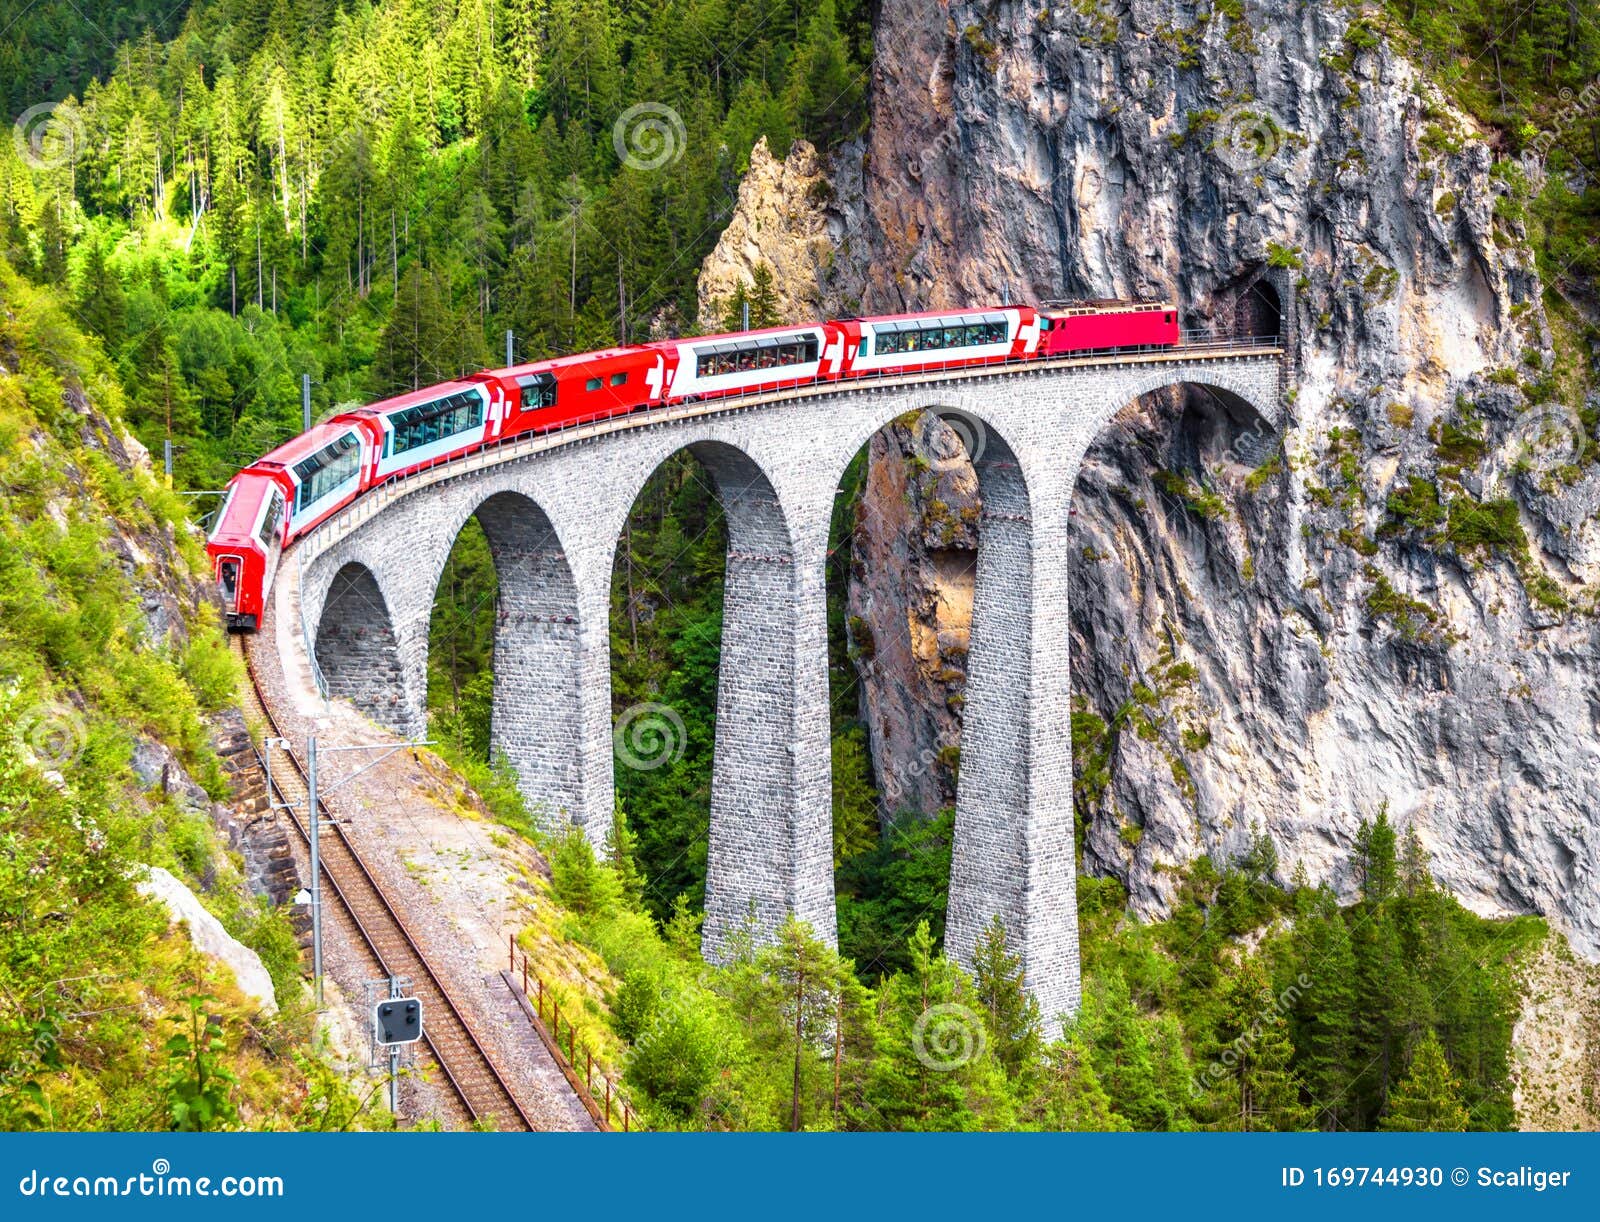 landwasser viaduct in filisur, switzerland. it is landmark of swiss alps. bernina express train on railroad bridge in mountains.